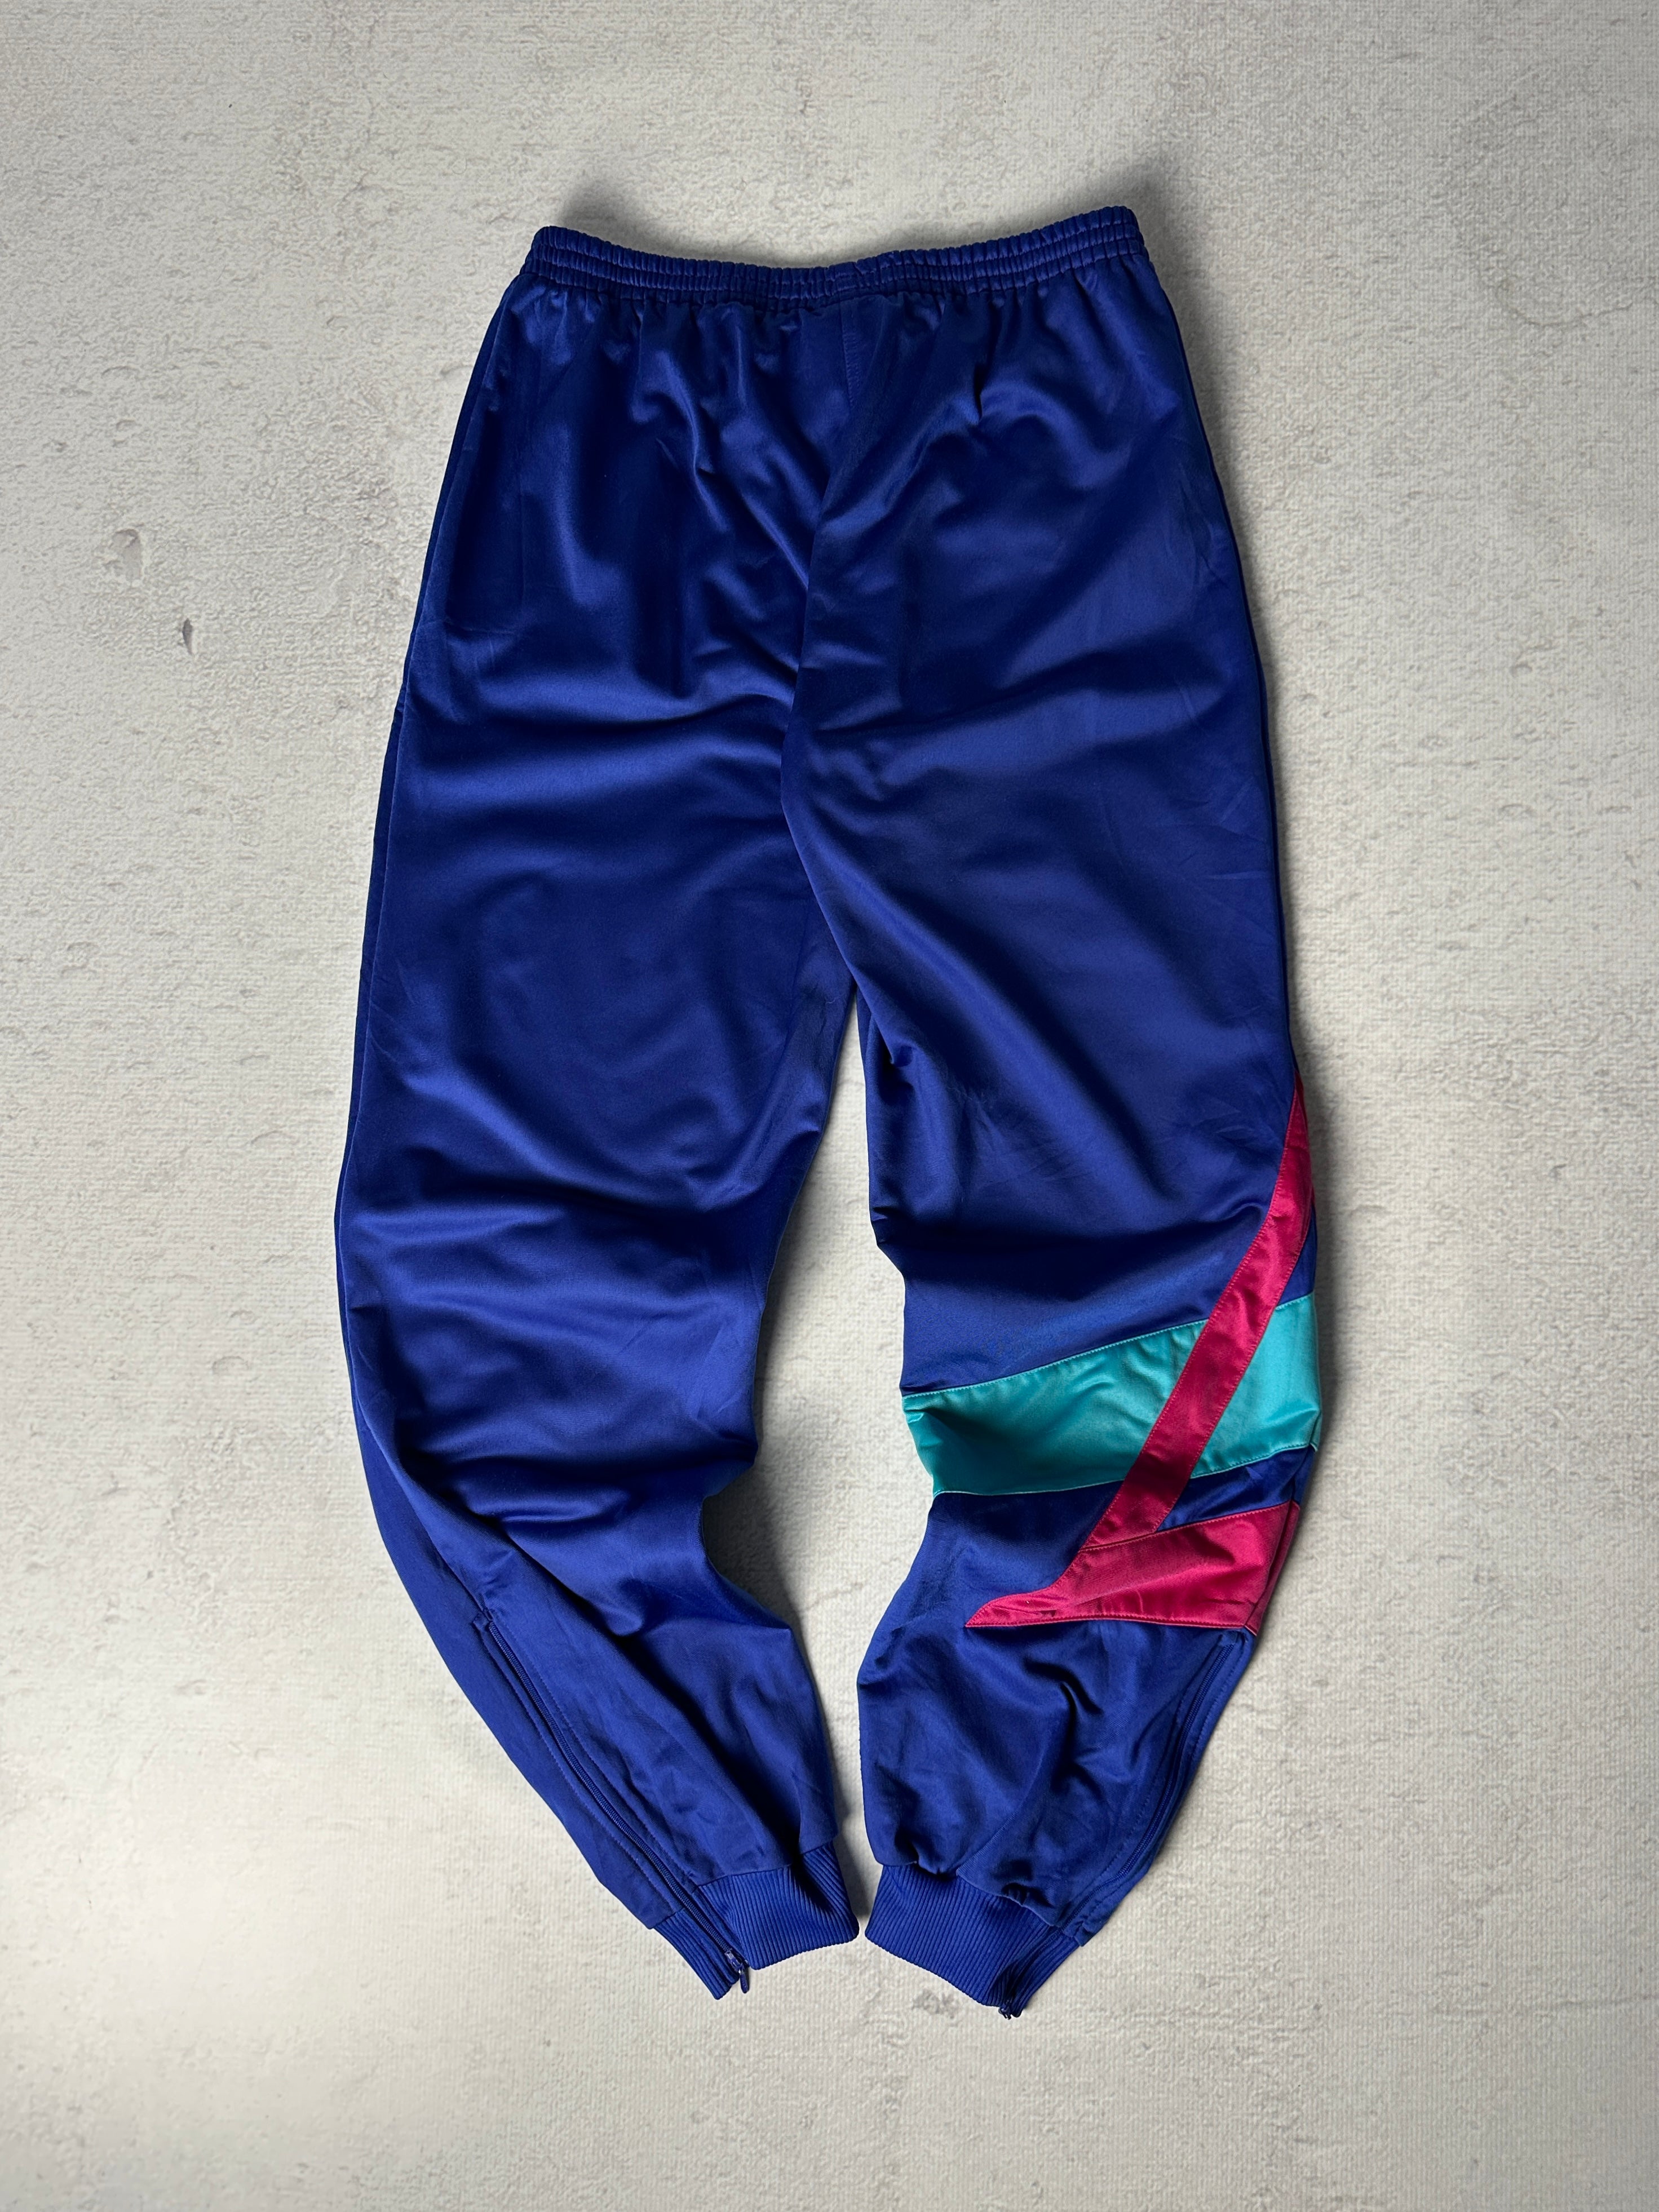 Vintage Adidas Cuffed Track Pants - Men's XL